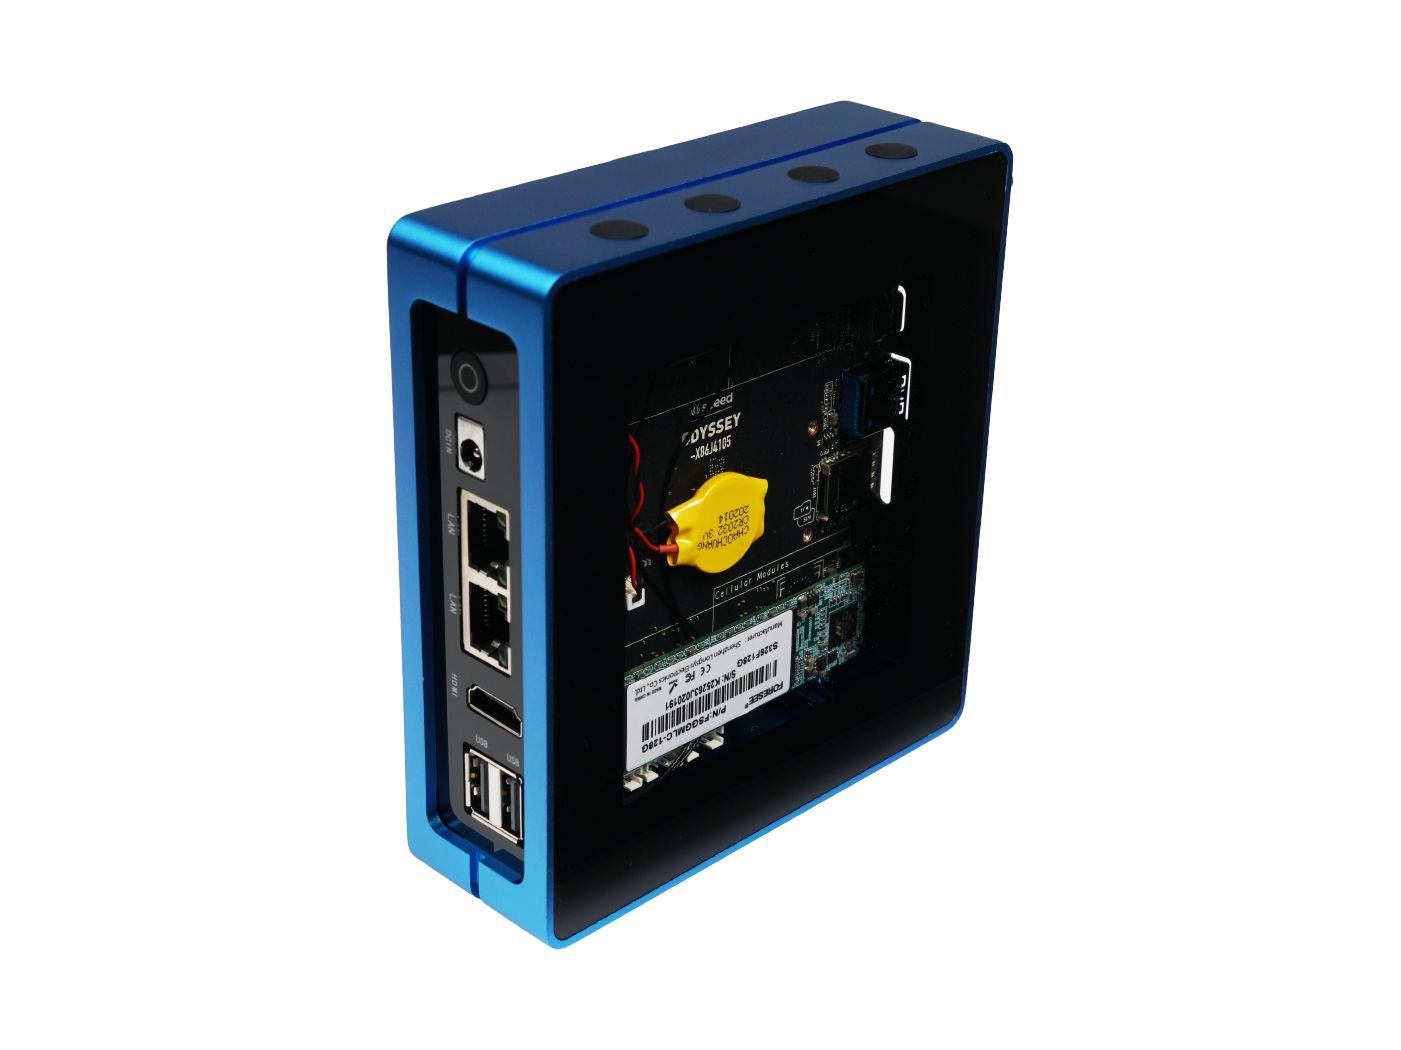 Odyssey Blue: Quad Core Celeron J4125 Windows 10 Mini PC with